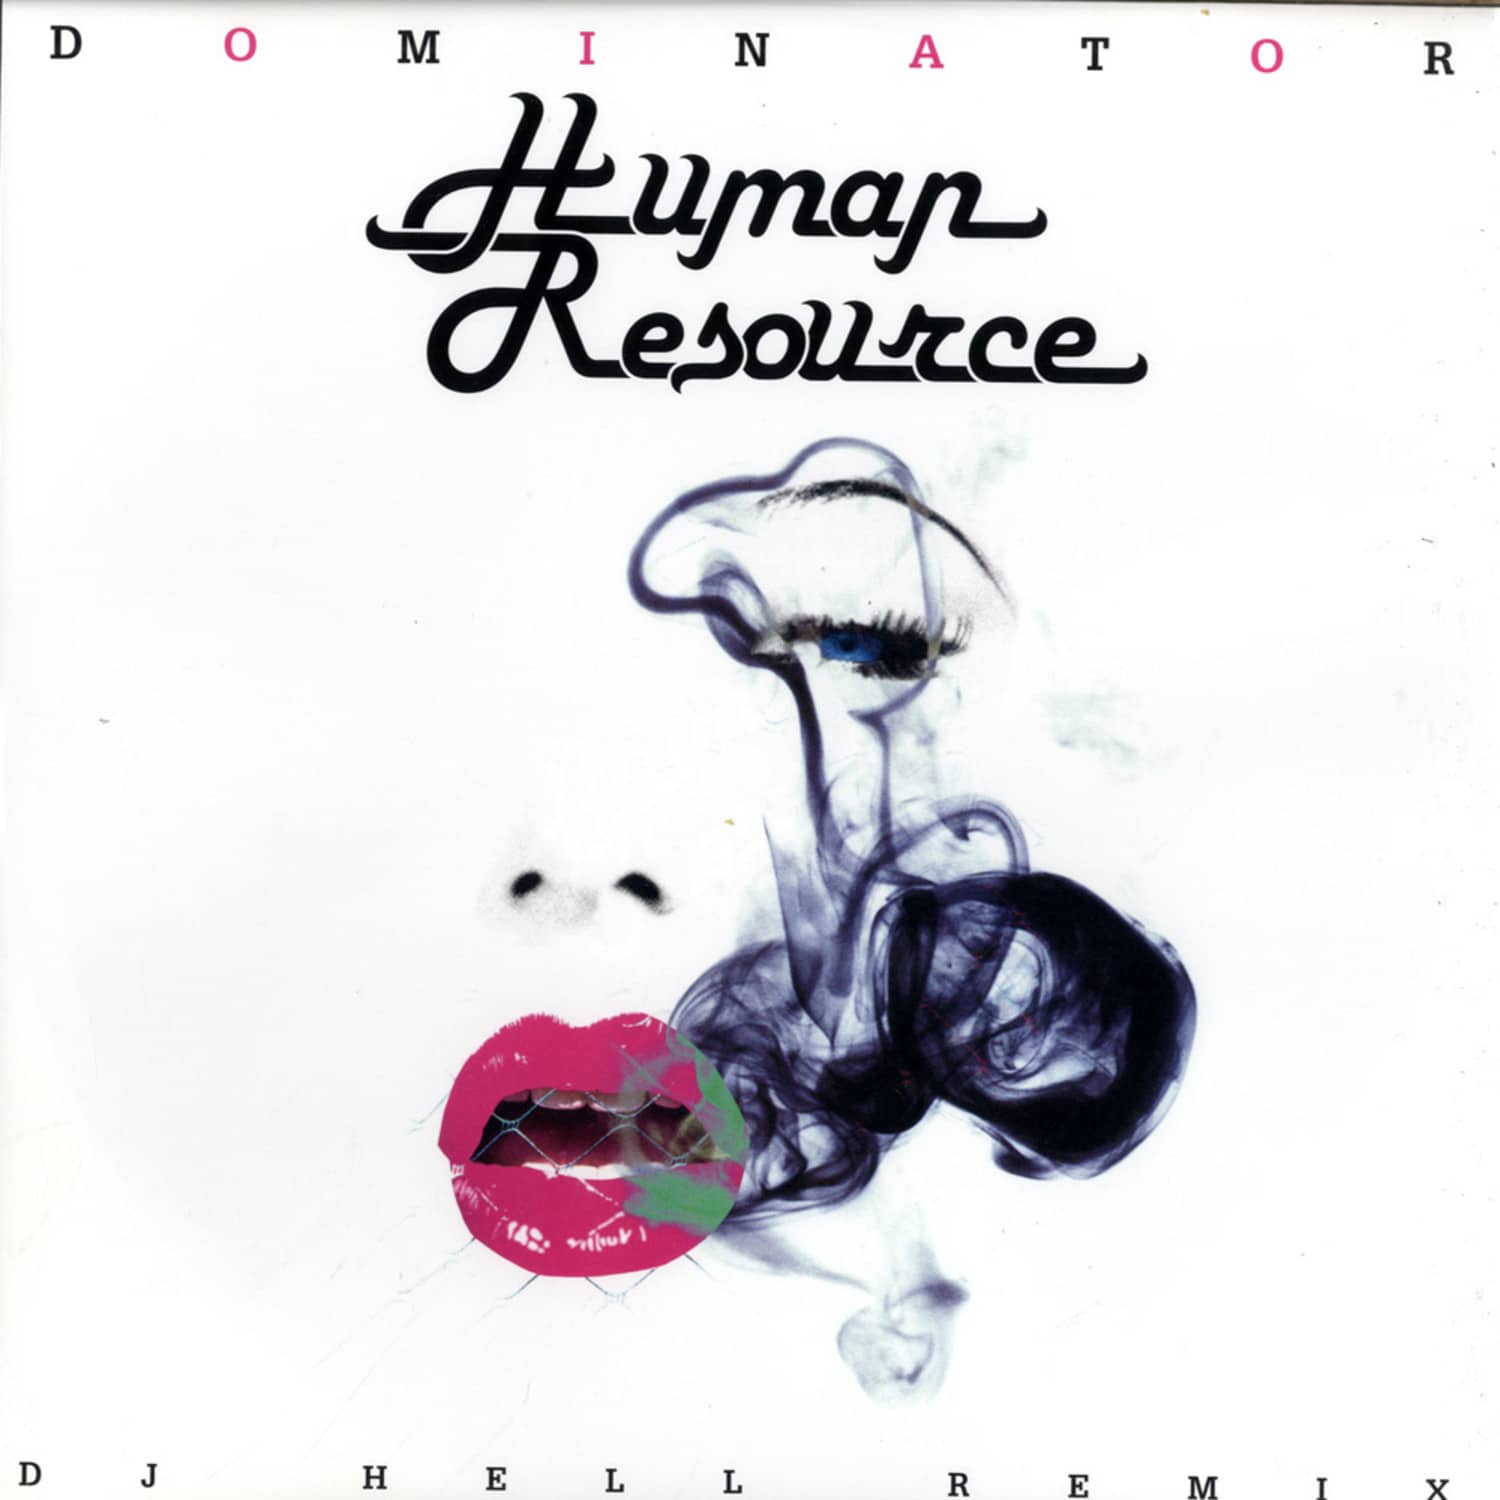 Human Resource - DOMINATOR 